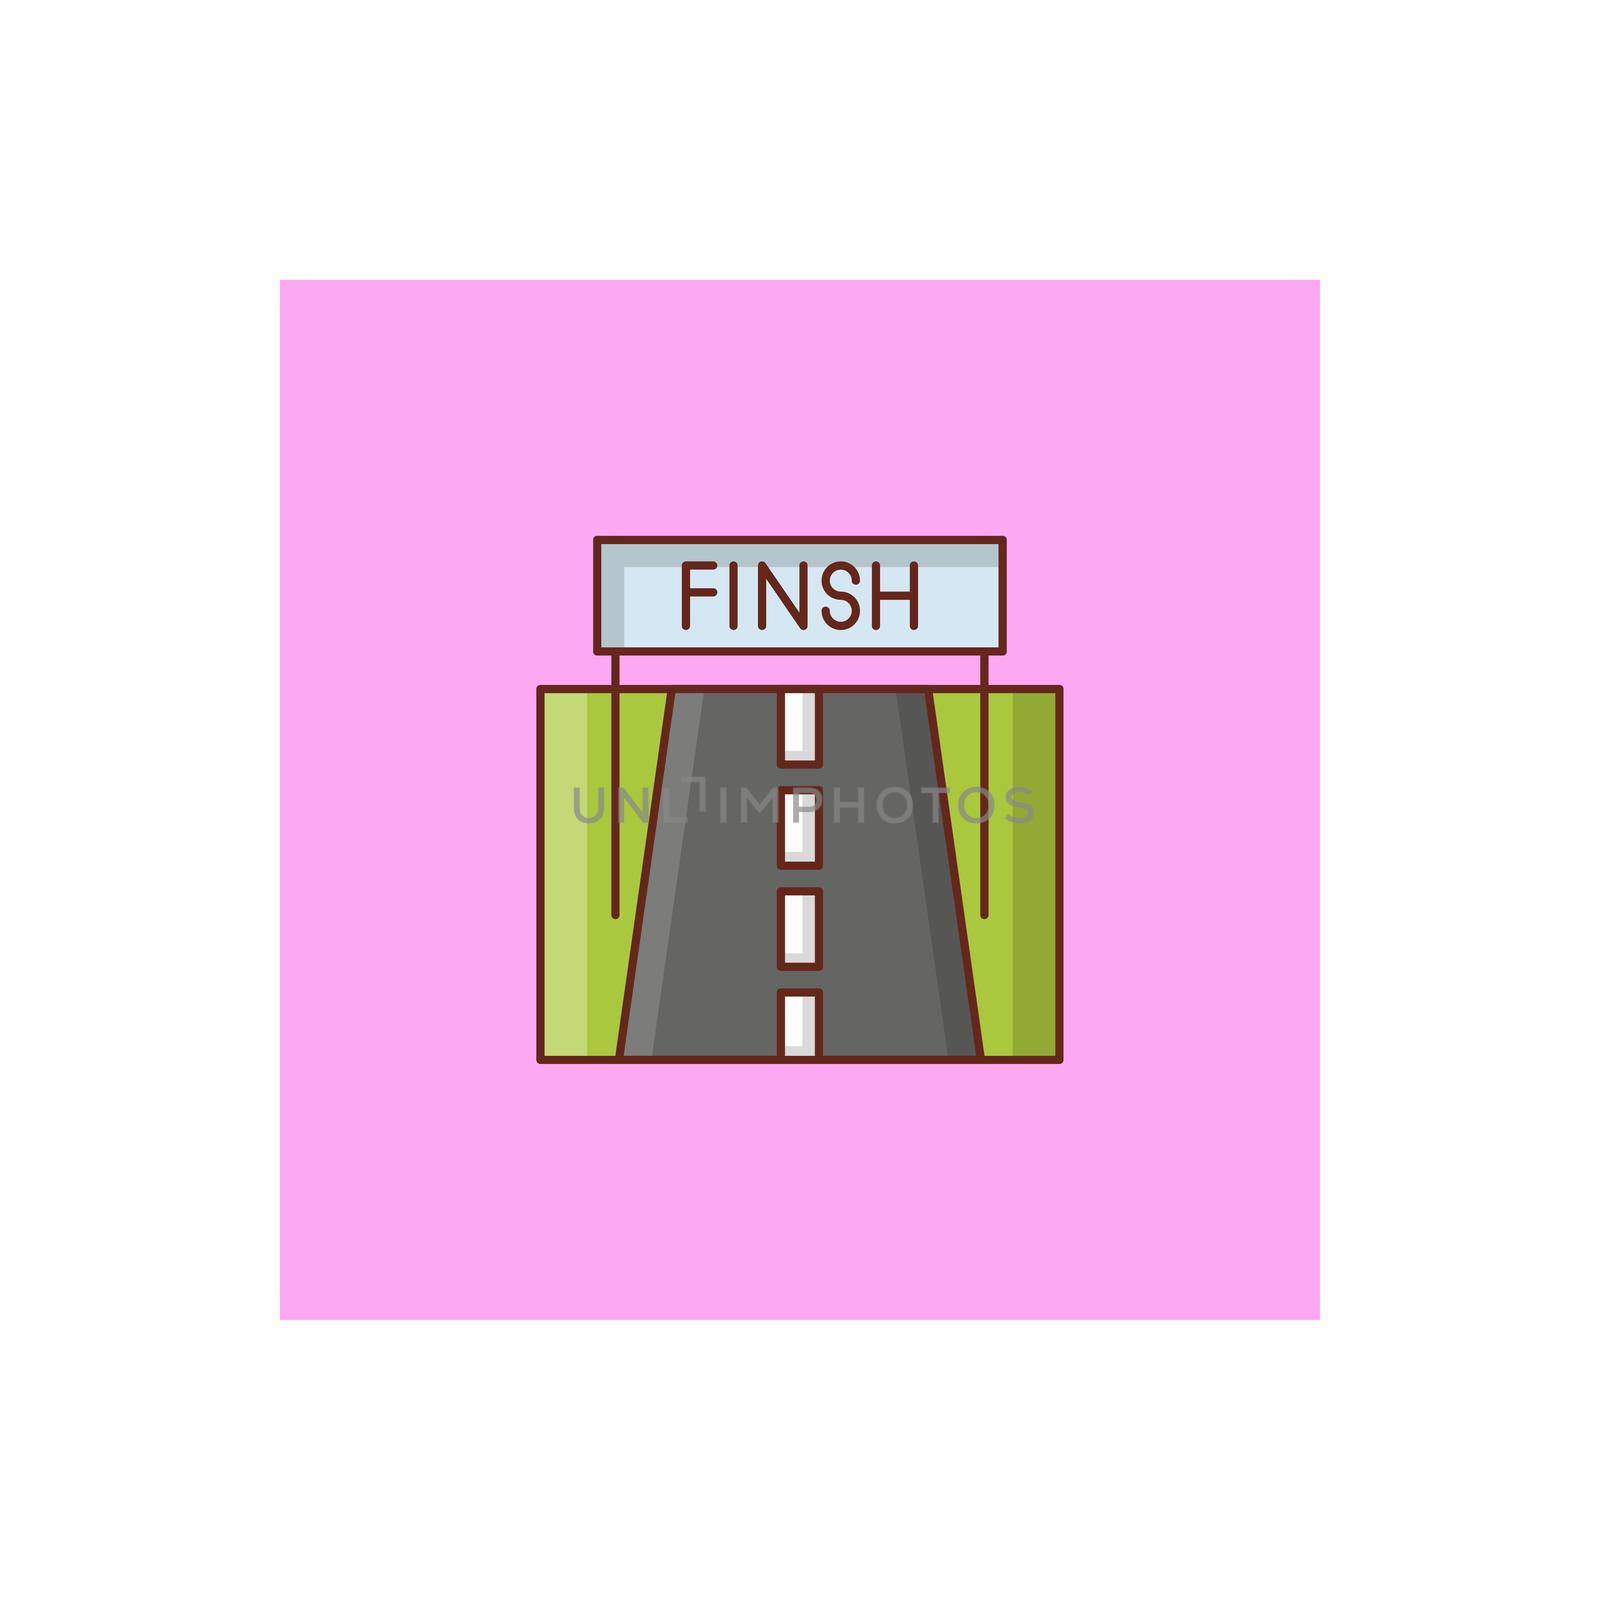 finish by FlaticonsDesign